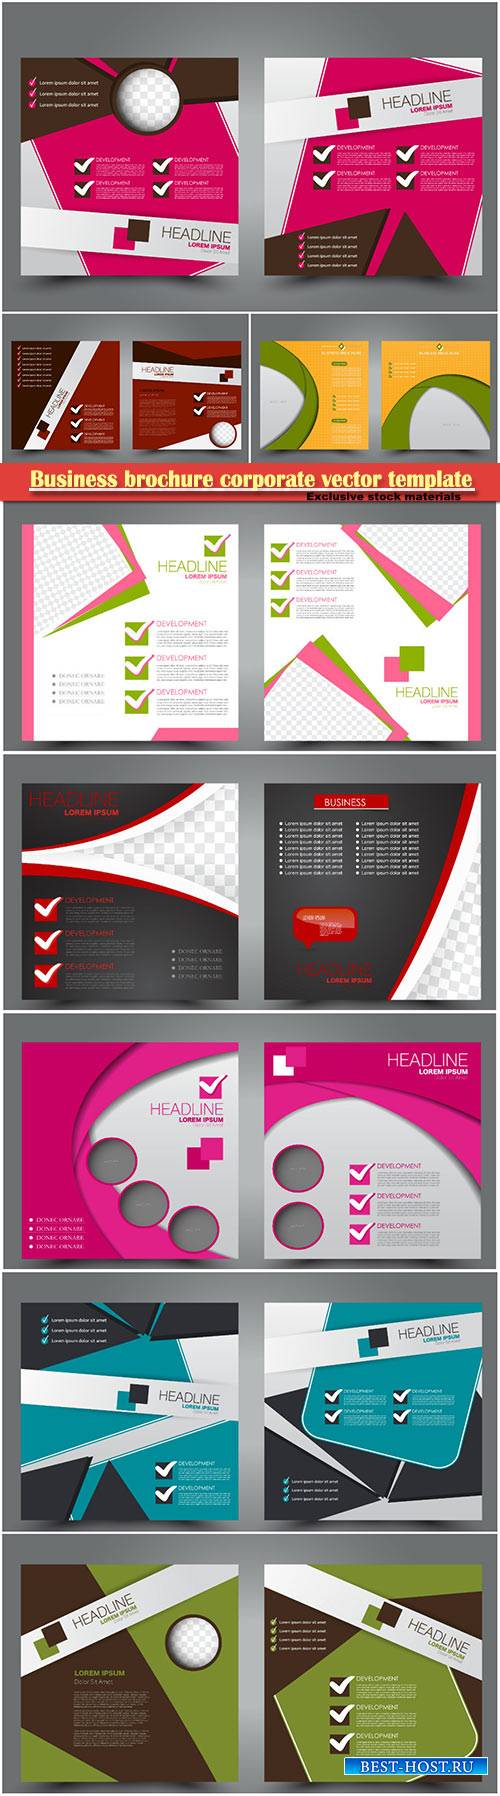 Business brochure corporate vector template, magazine flyer mockup # 14